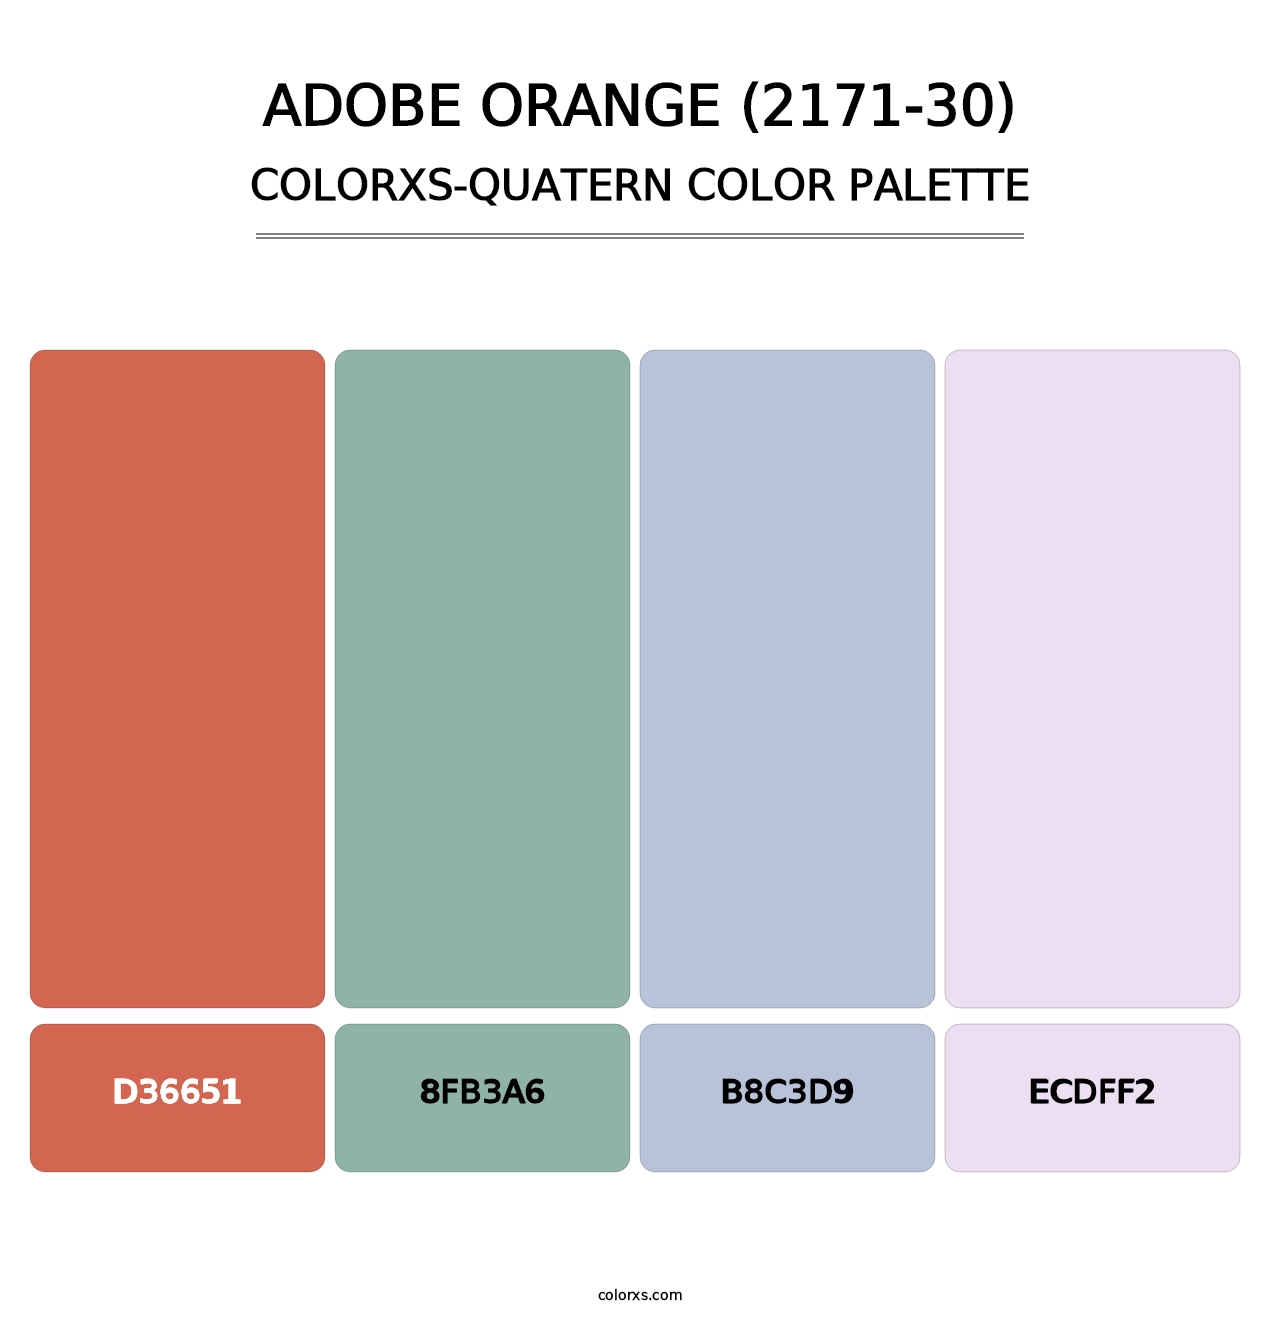 Adobe Orange (2171-30) - Colorxs Quatern Palette